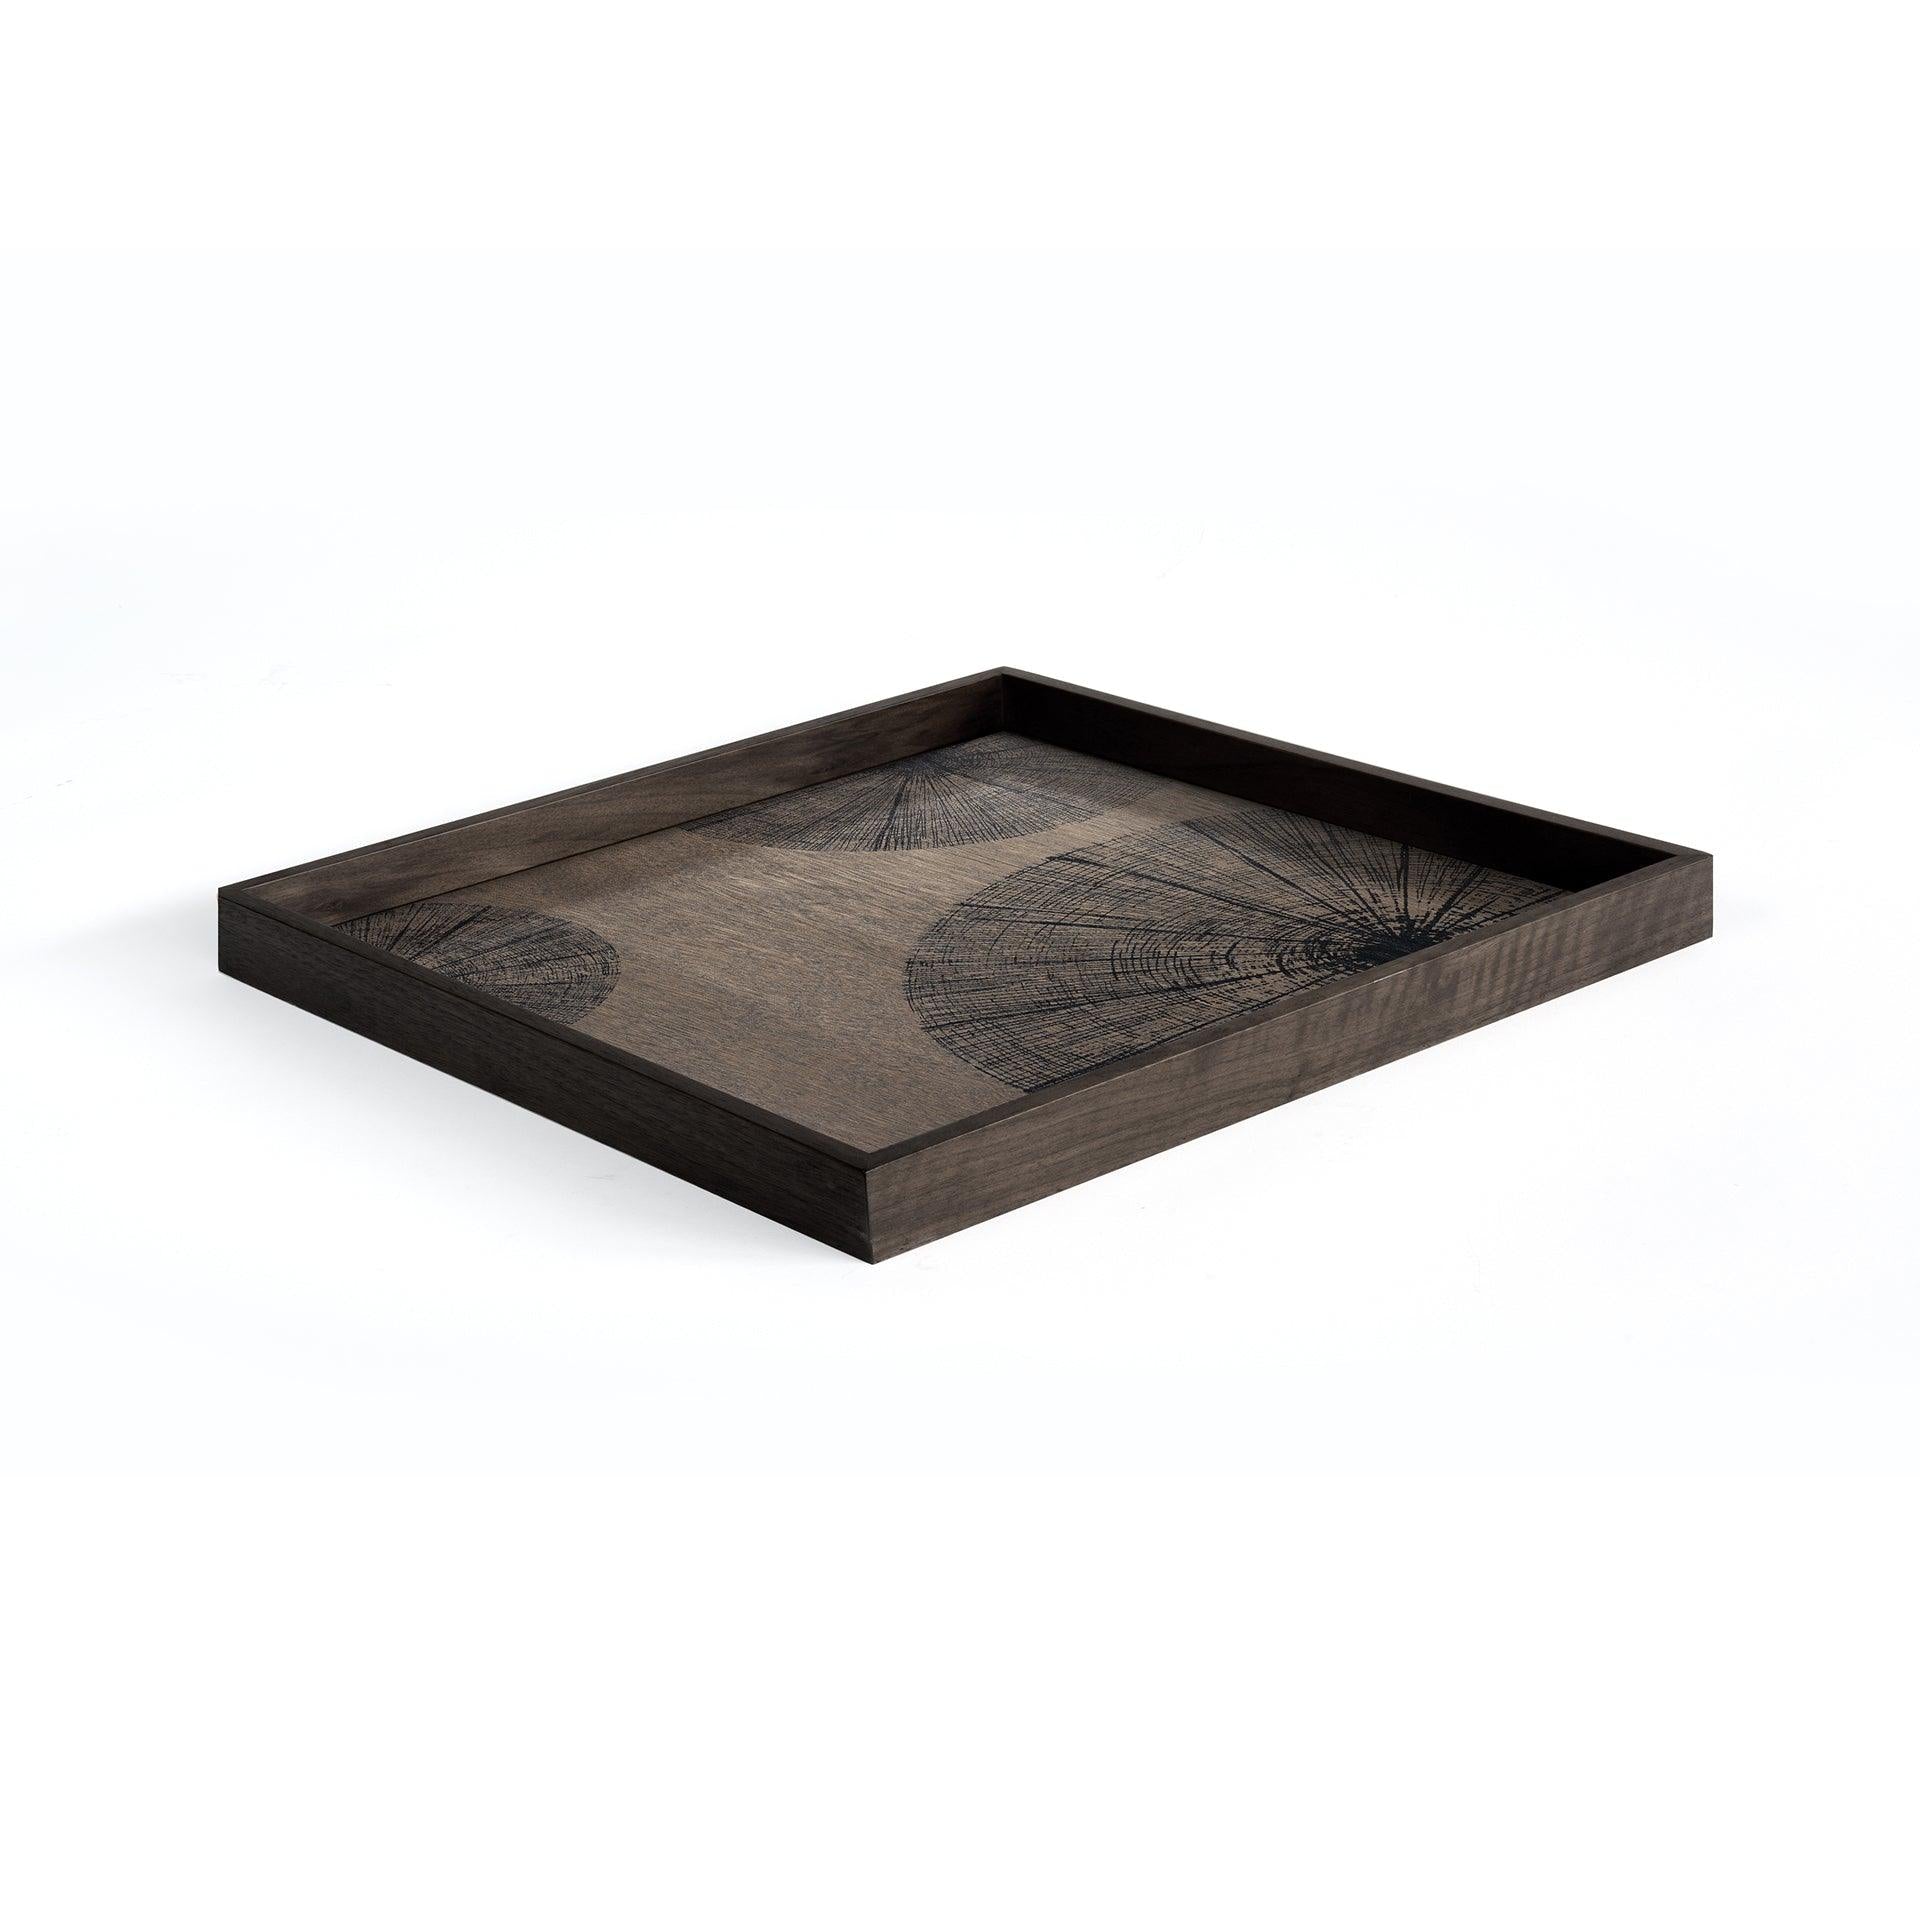 Notre Monde (Ethnicraft) DECORATIVE - Black Slices Large Square Wooden Tray